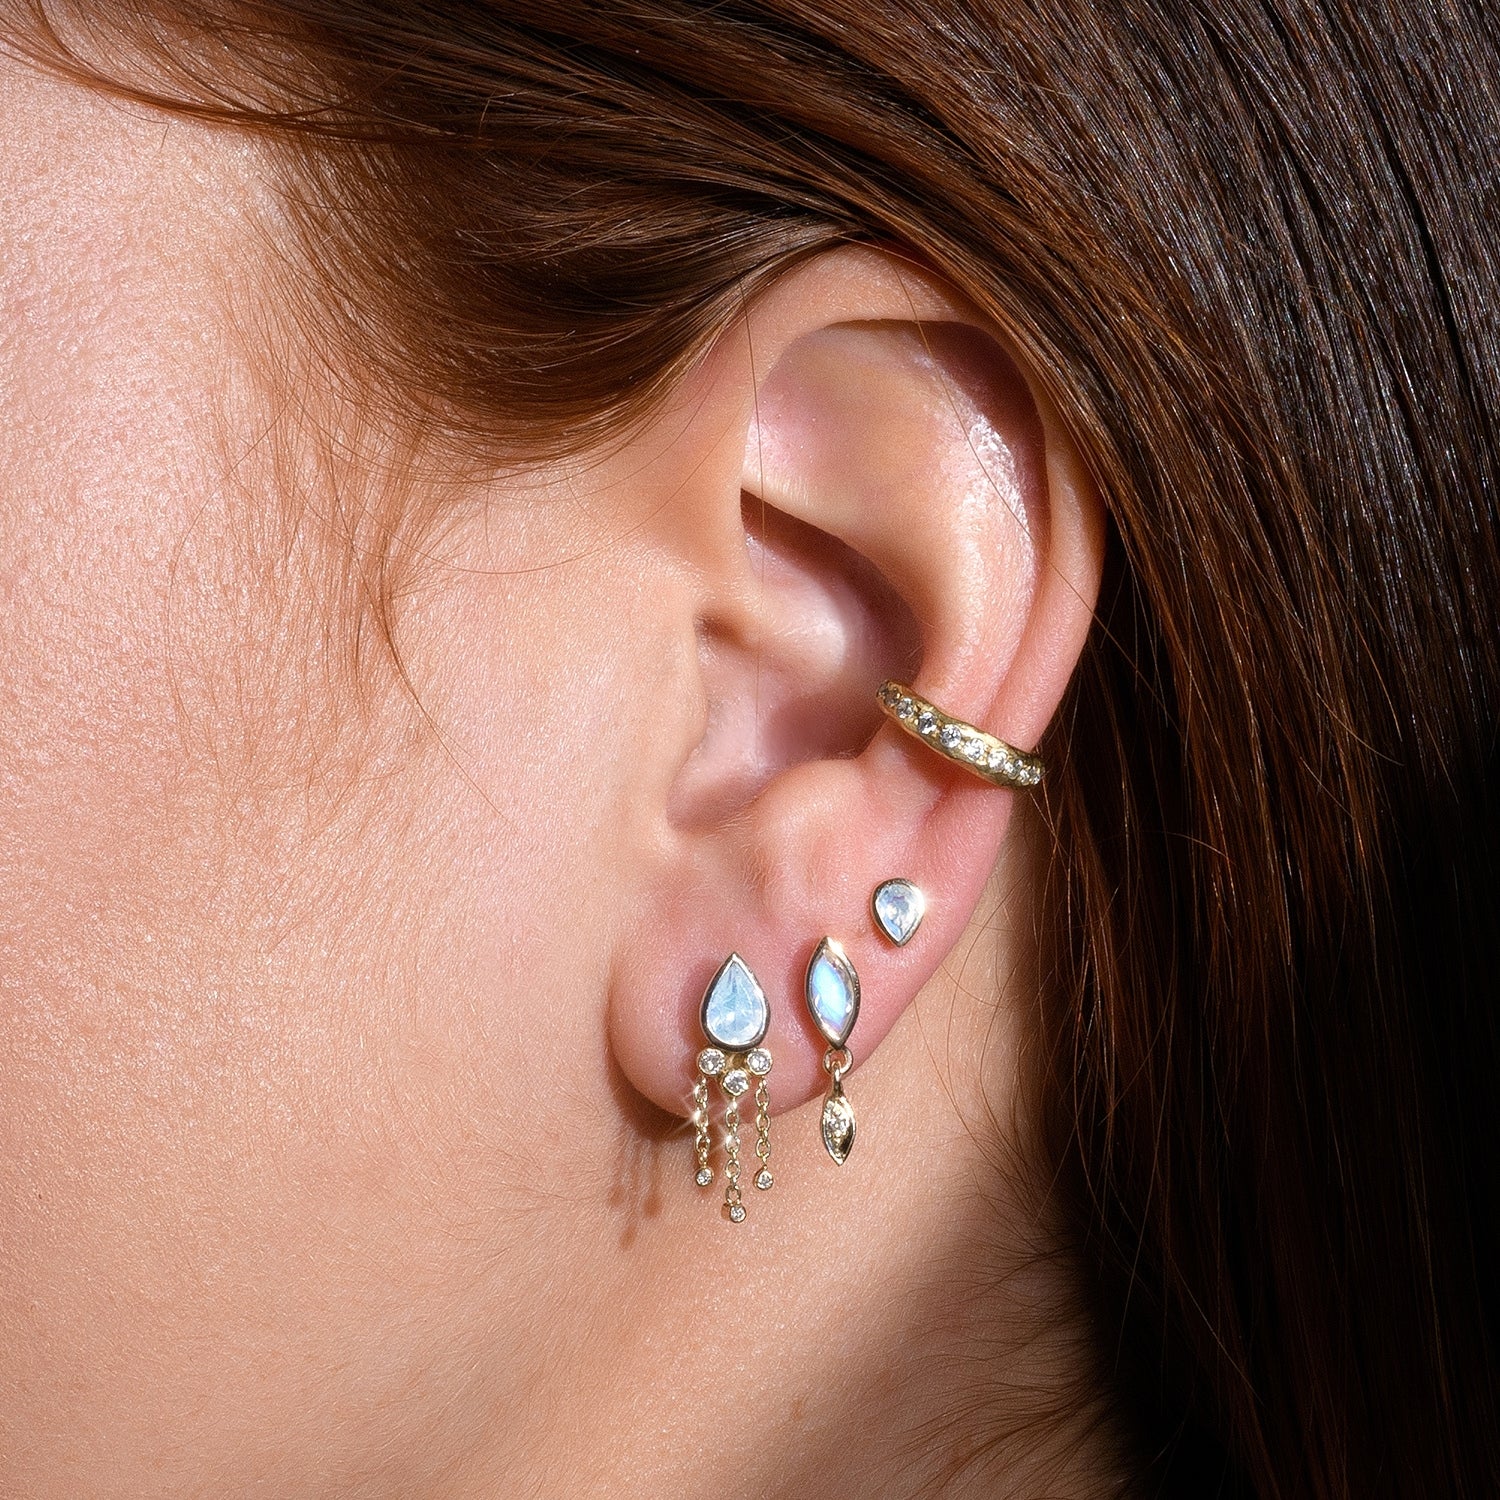 Ratri Earring & Moonstone - one of a kind - Danielle Gerber Freedom Jewelry